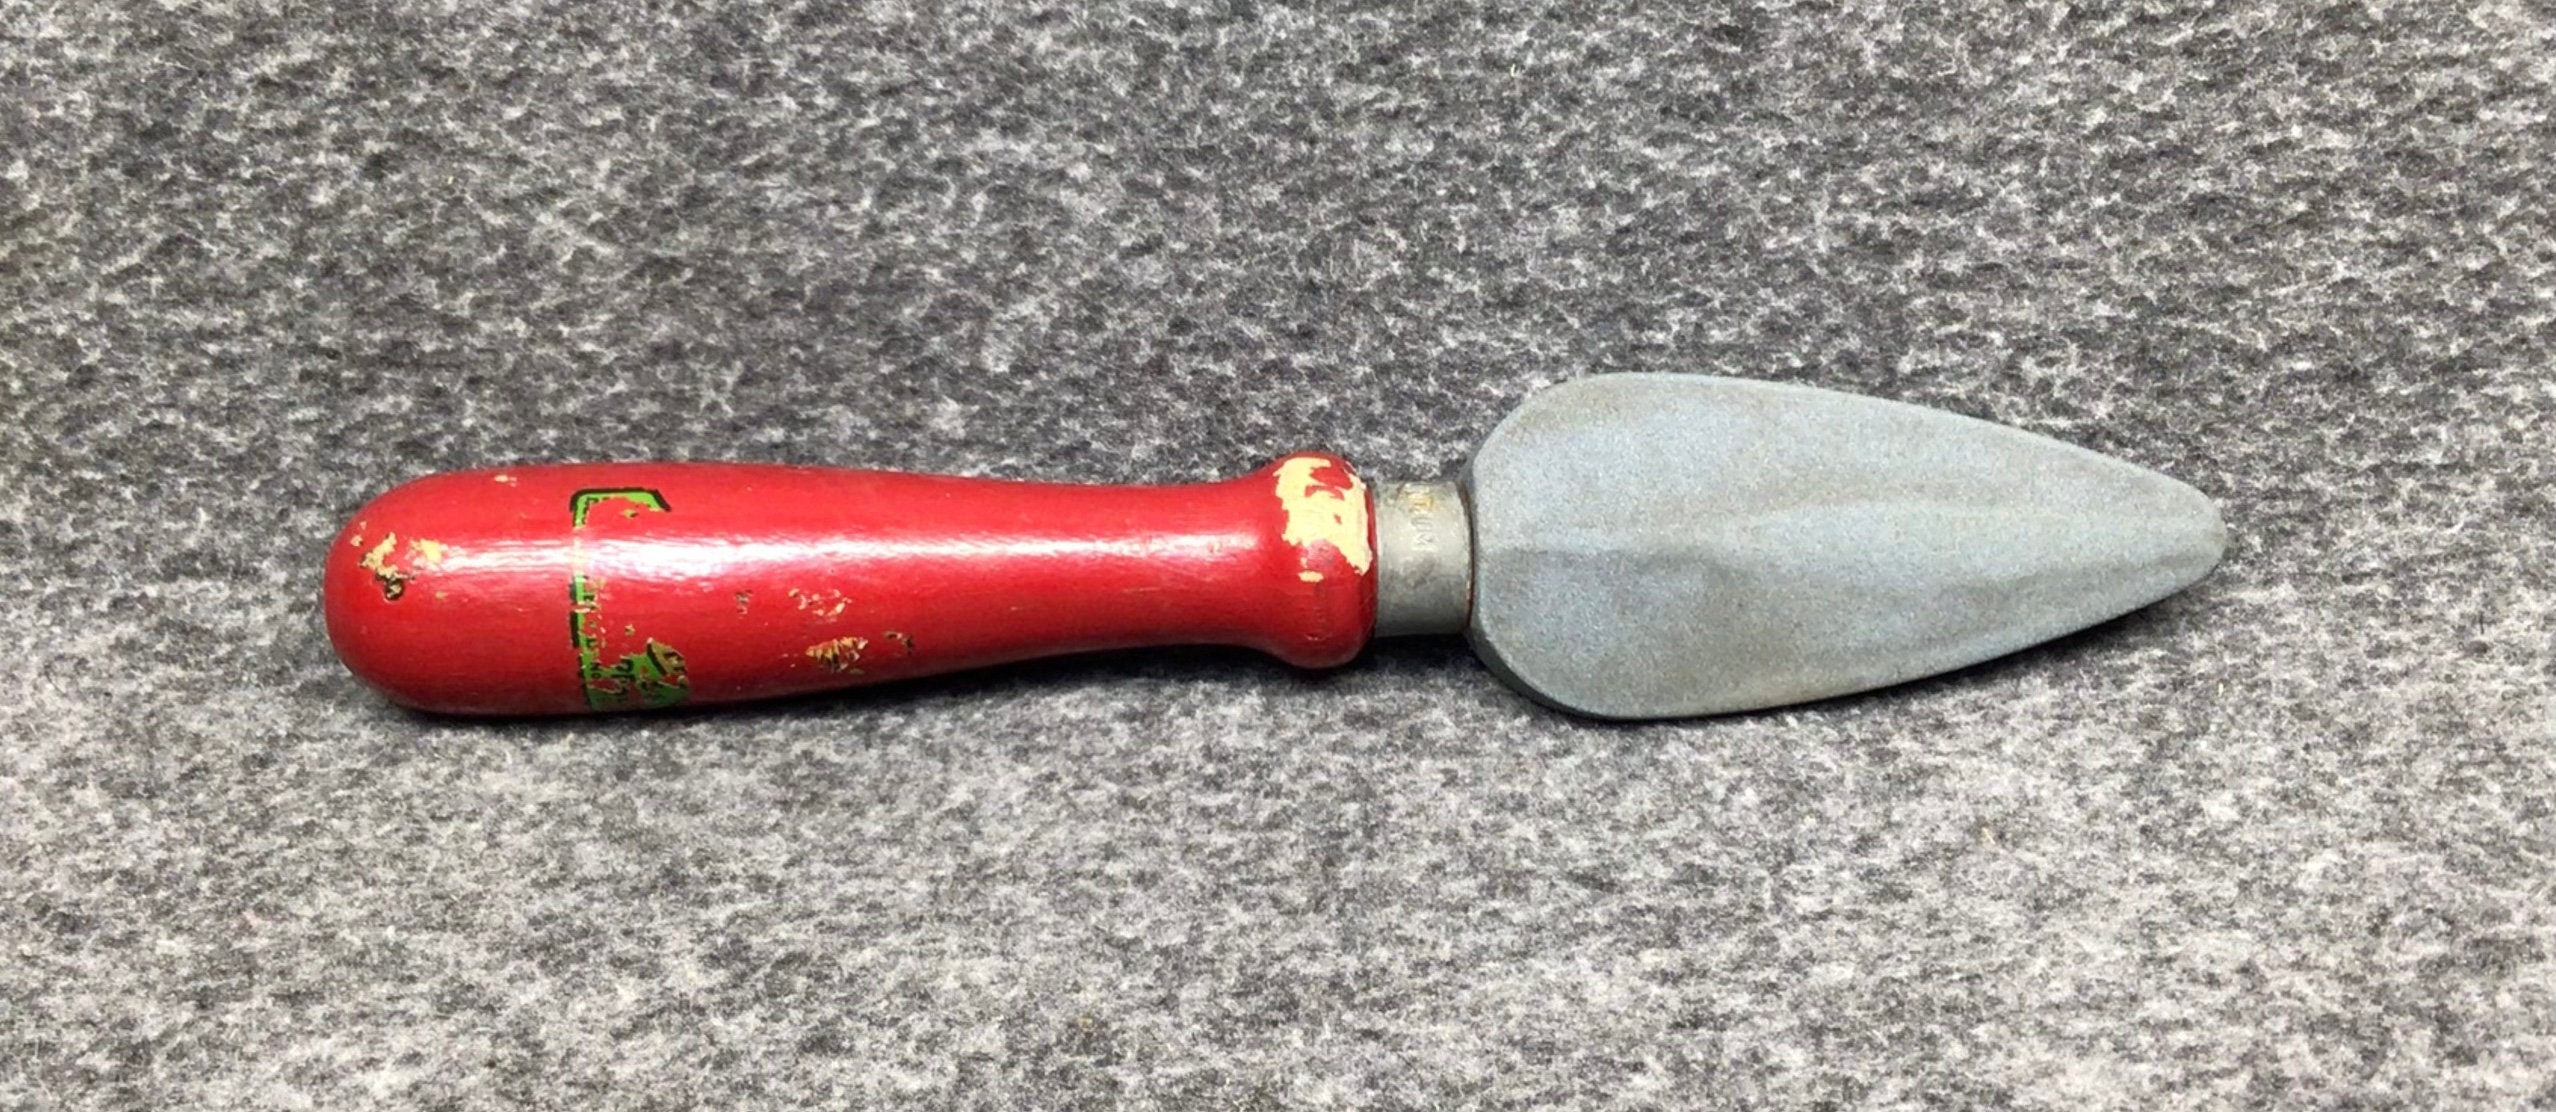 Sharpening Stone Block 4.5 Aluminium Oxide Dual Grit Hone Knife Blade Sharpener